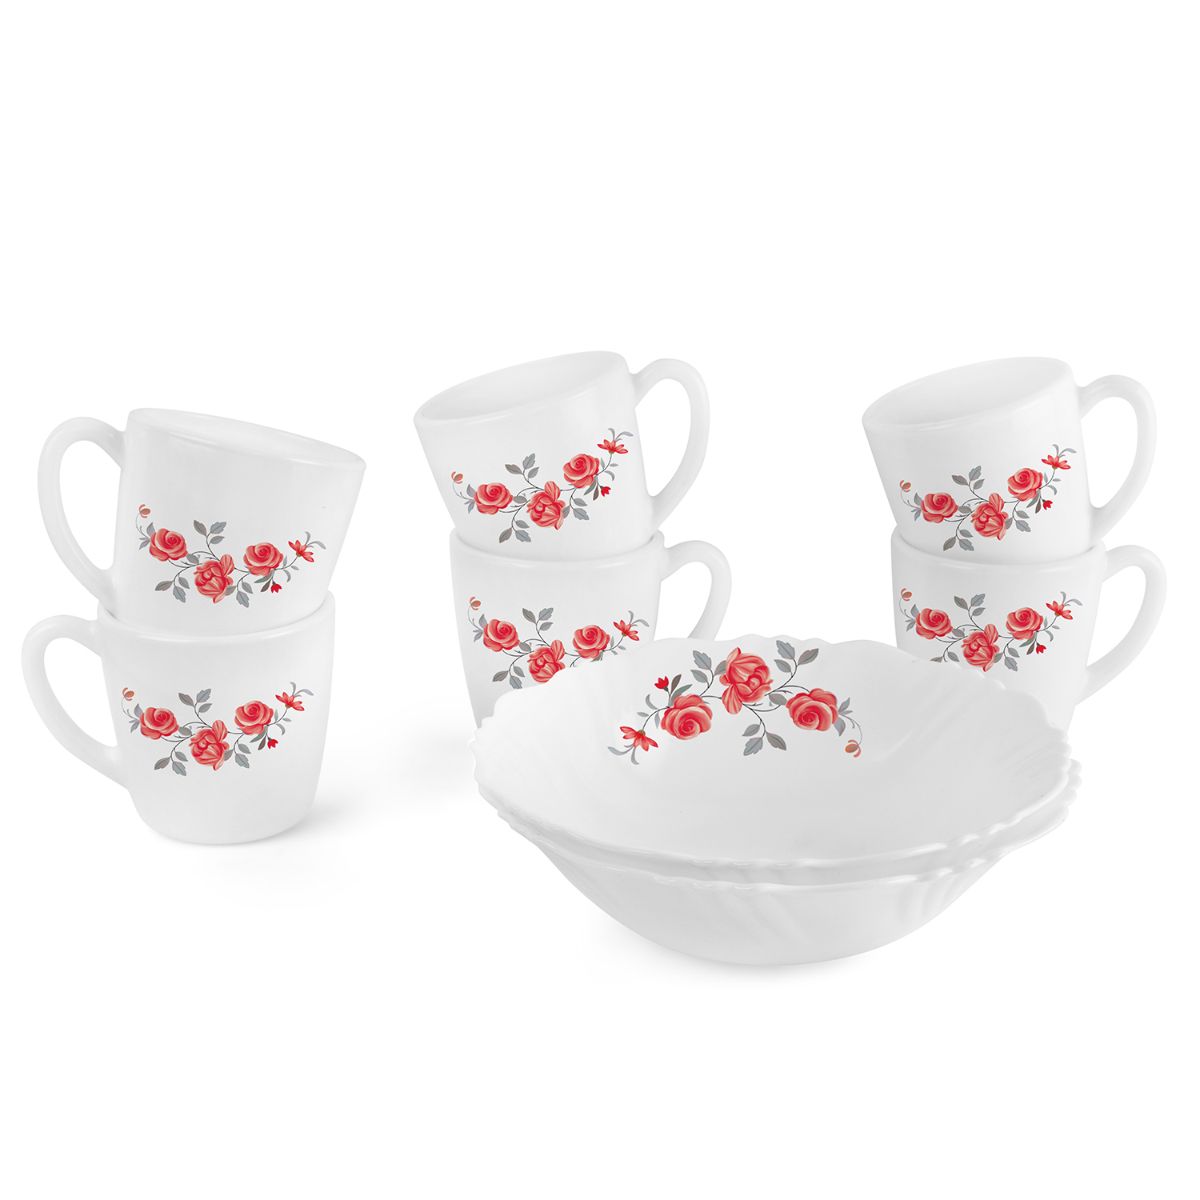 Imperial Series Quick Bite Bowl & Mug Gift set, 8 Pieces Red Rose Fantasy / 8 Pieces